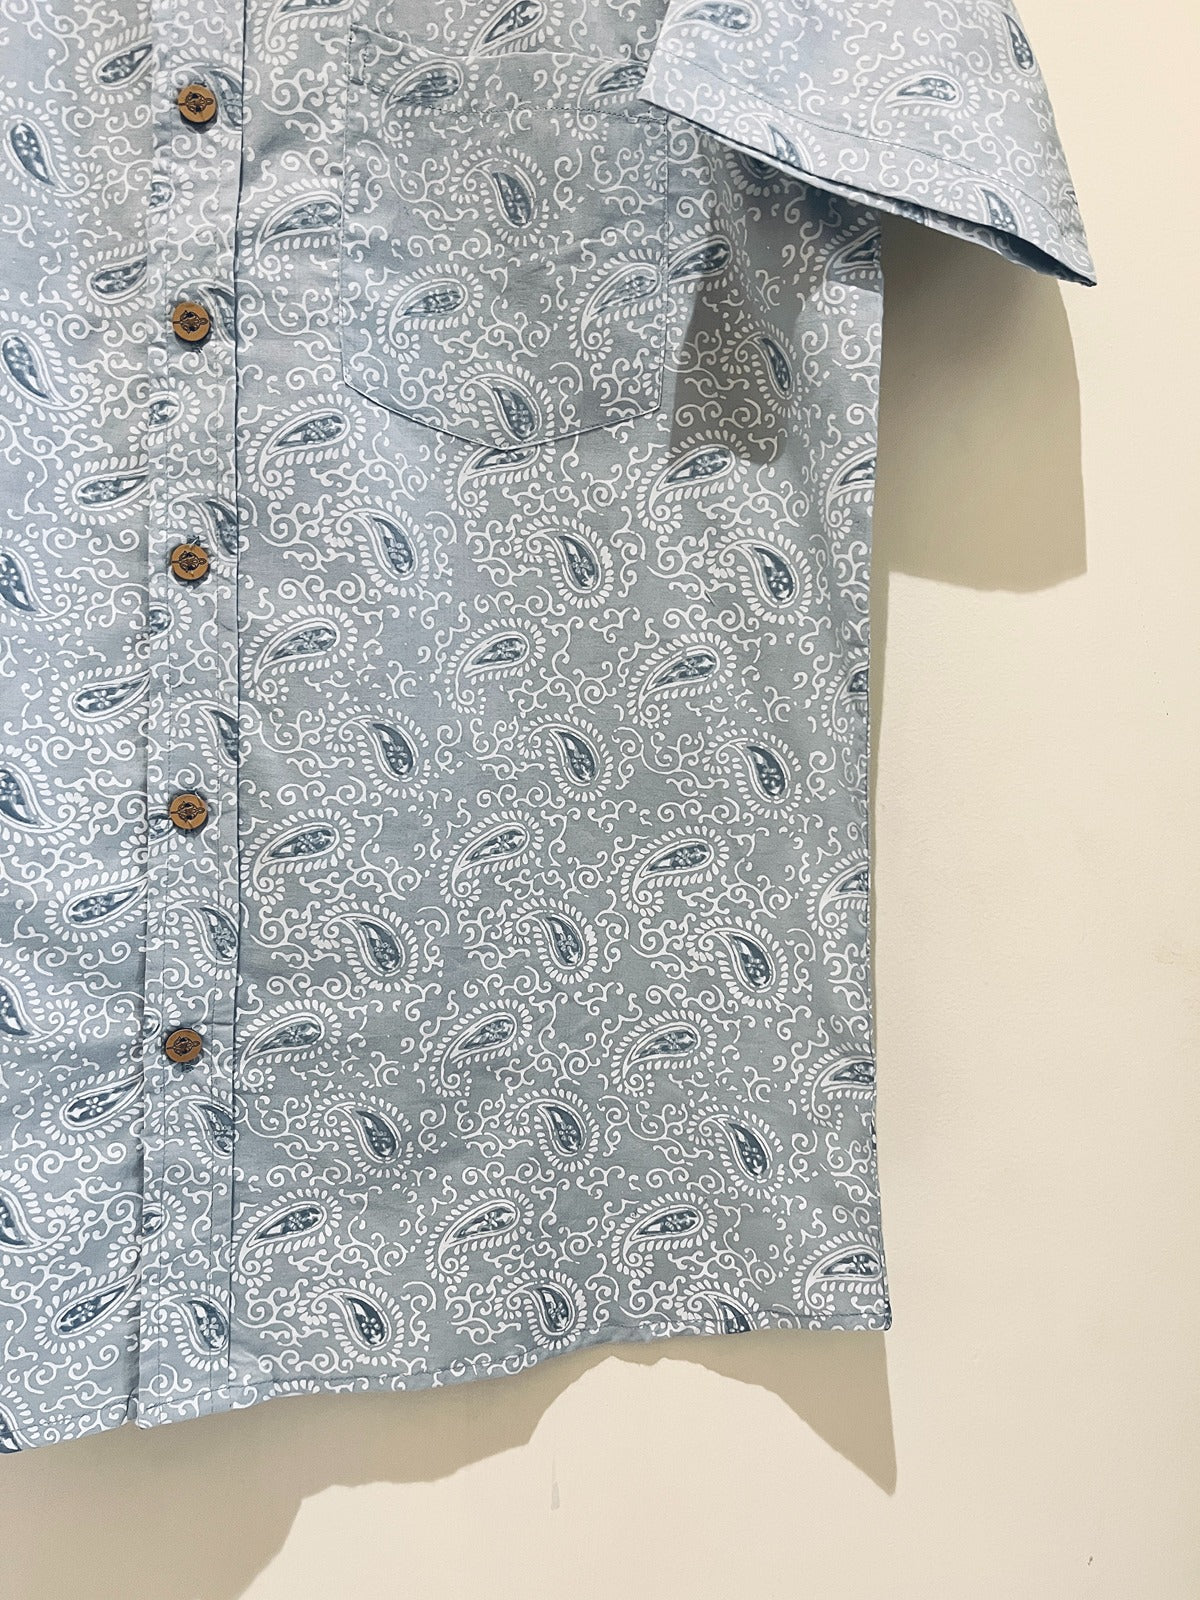 Cotton Block Printed Half Sleeve Shirt